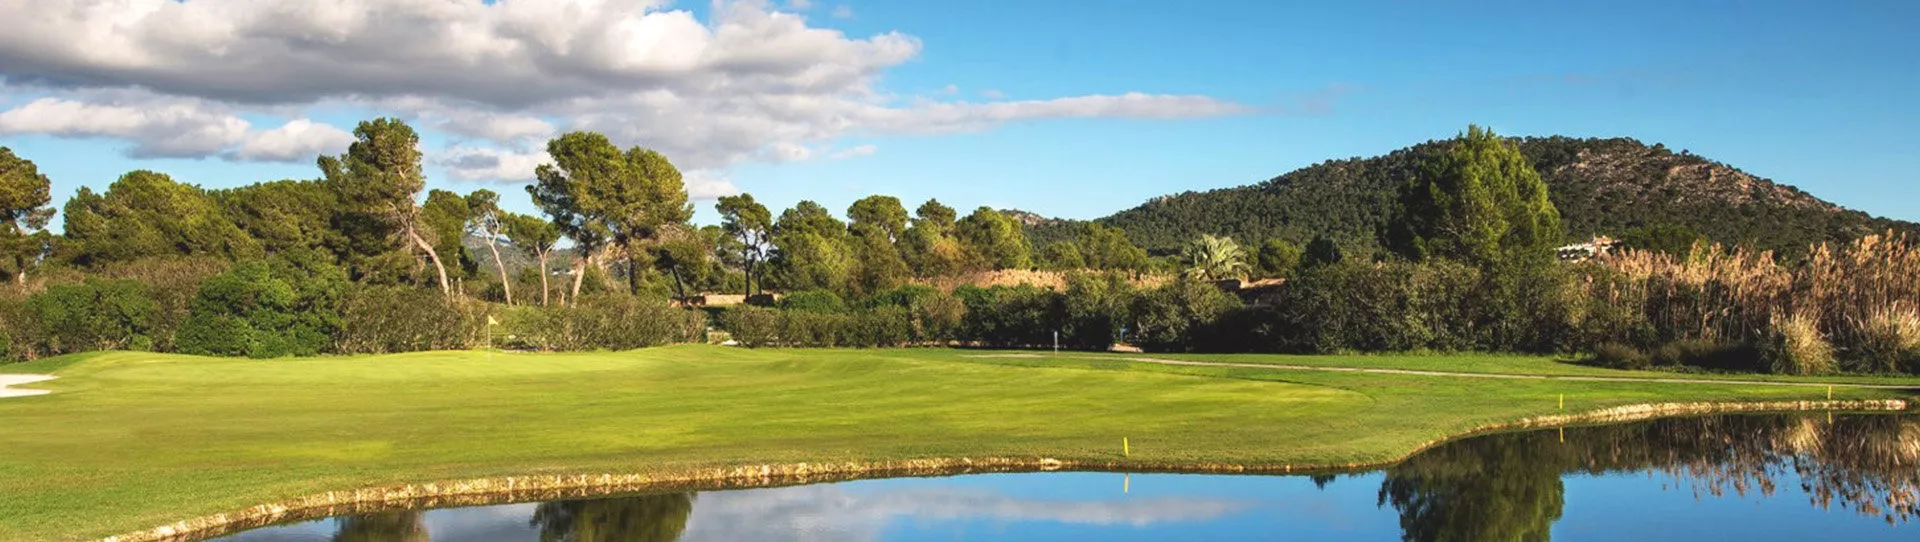 Spain golf holidays - Santa Ponsa I & Bendinat 3 Rounds - Photo 1